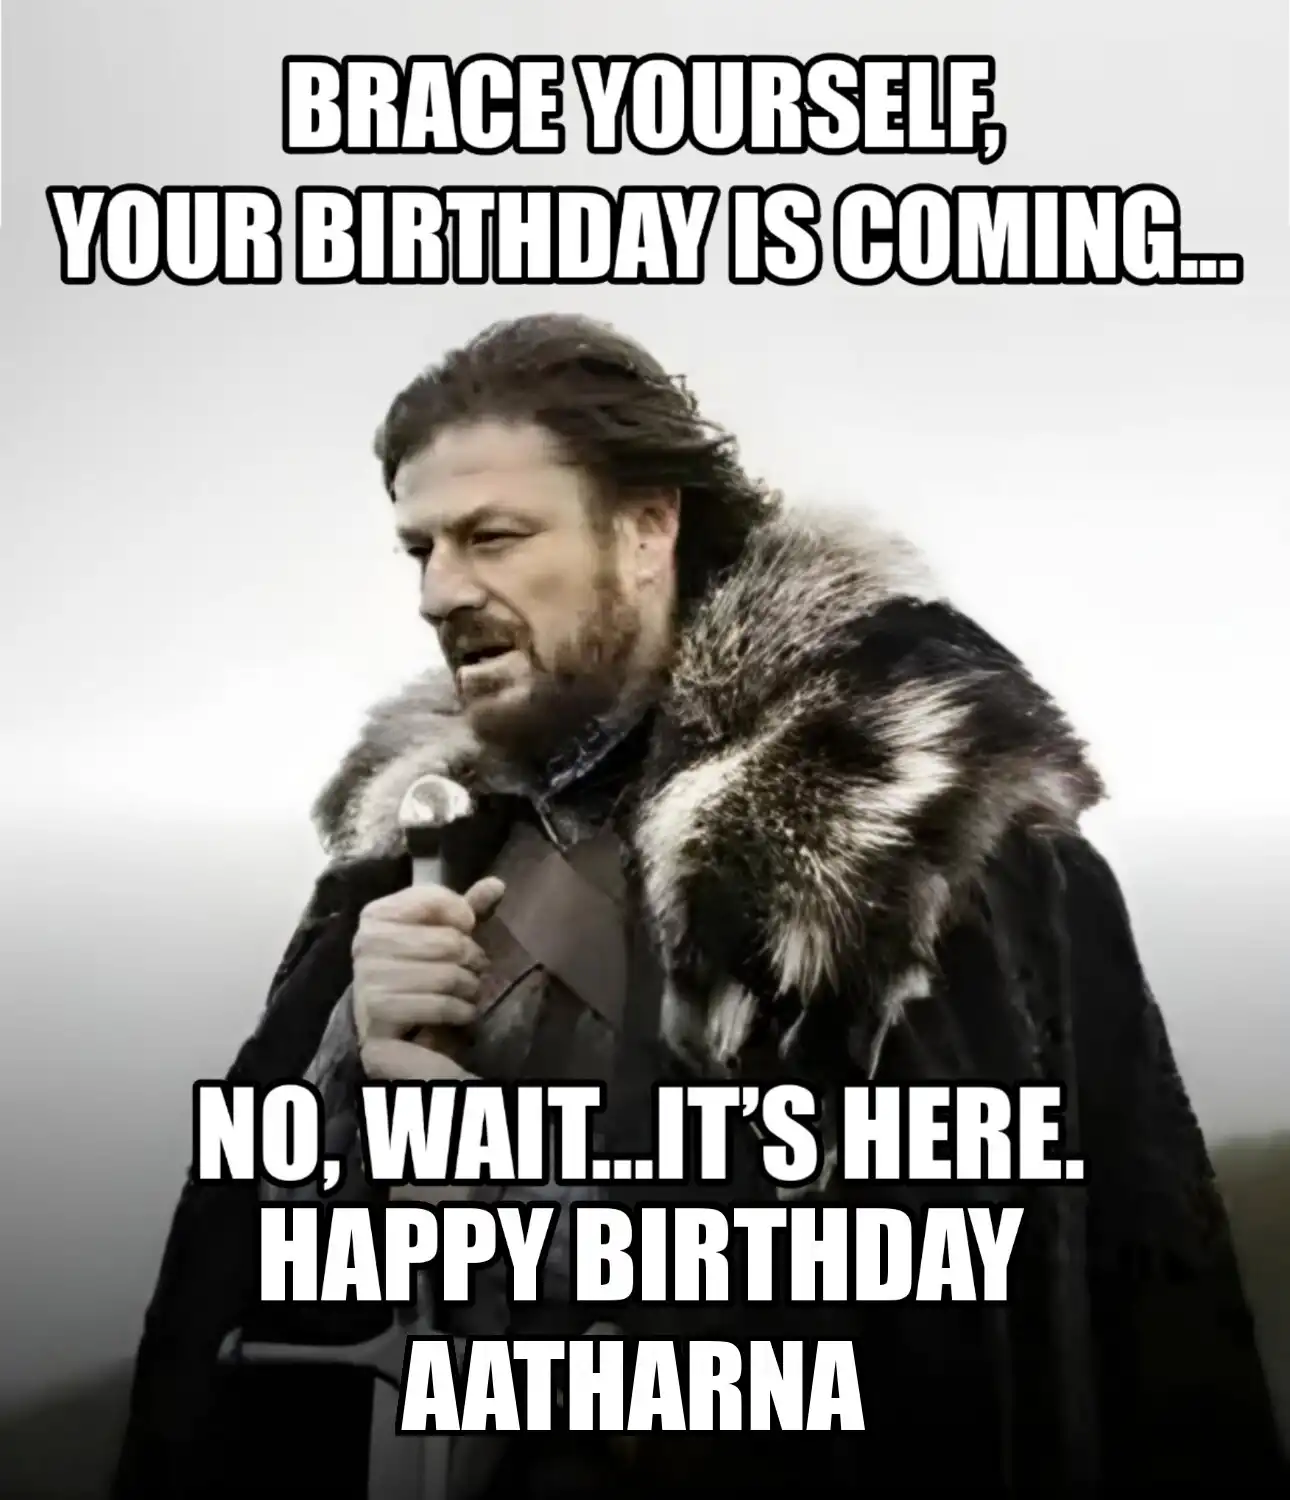 Happy Birthday Aatharna Brace Yourself Your Birthday Is Coming Meme